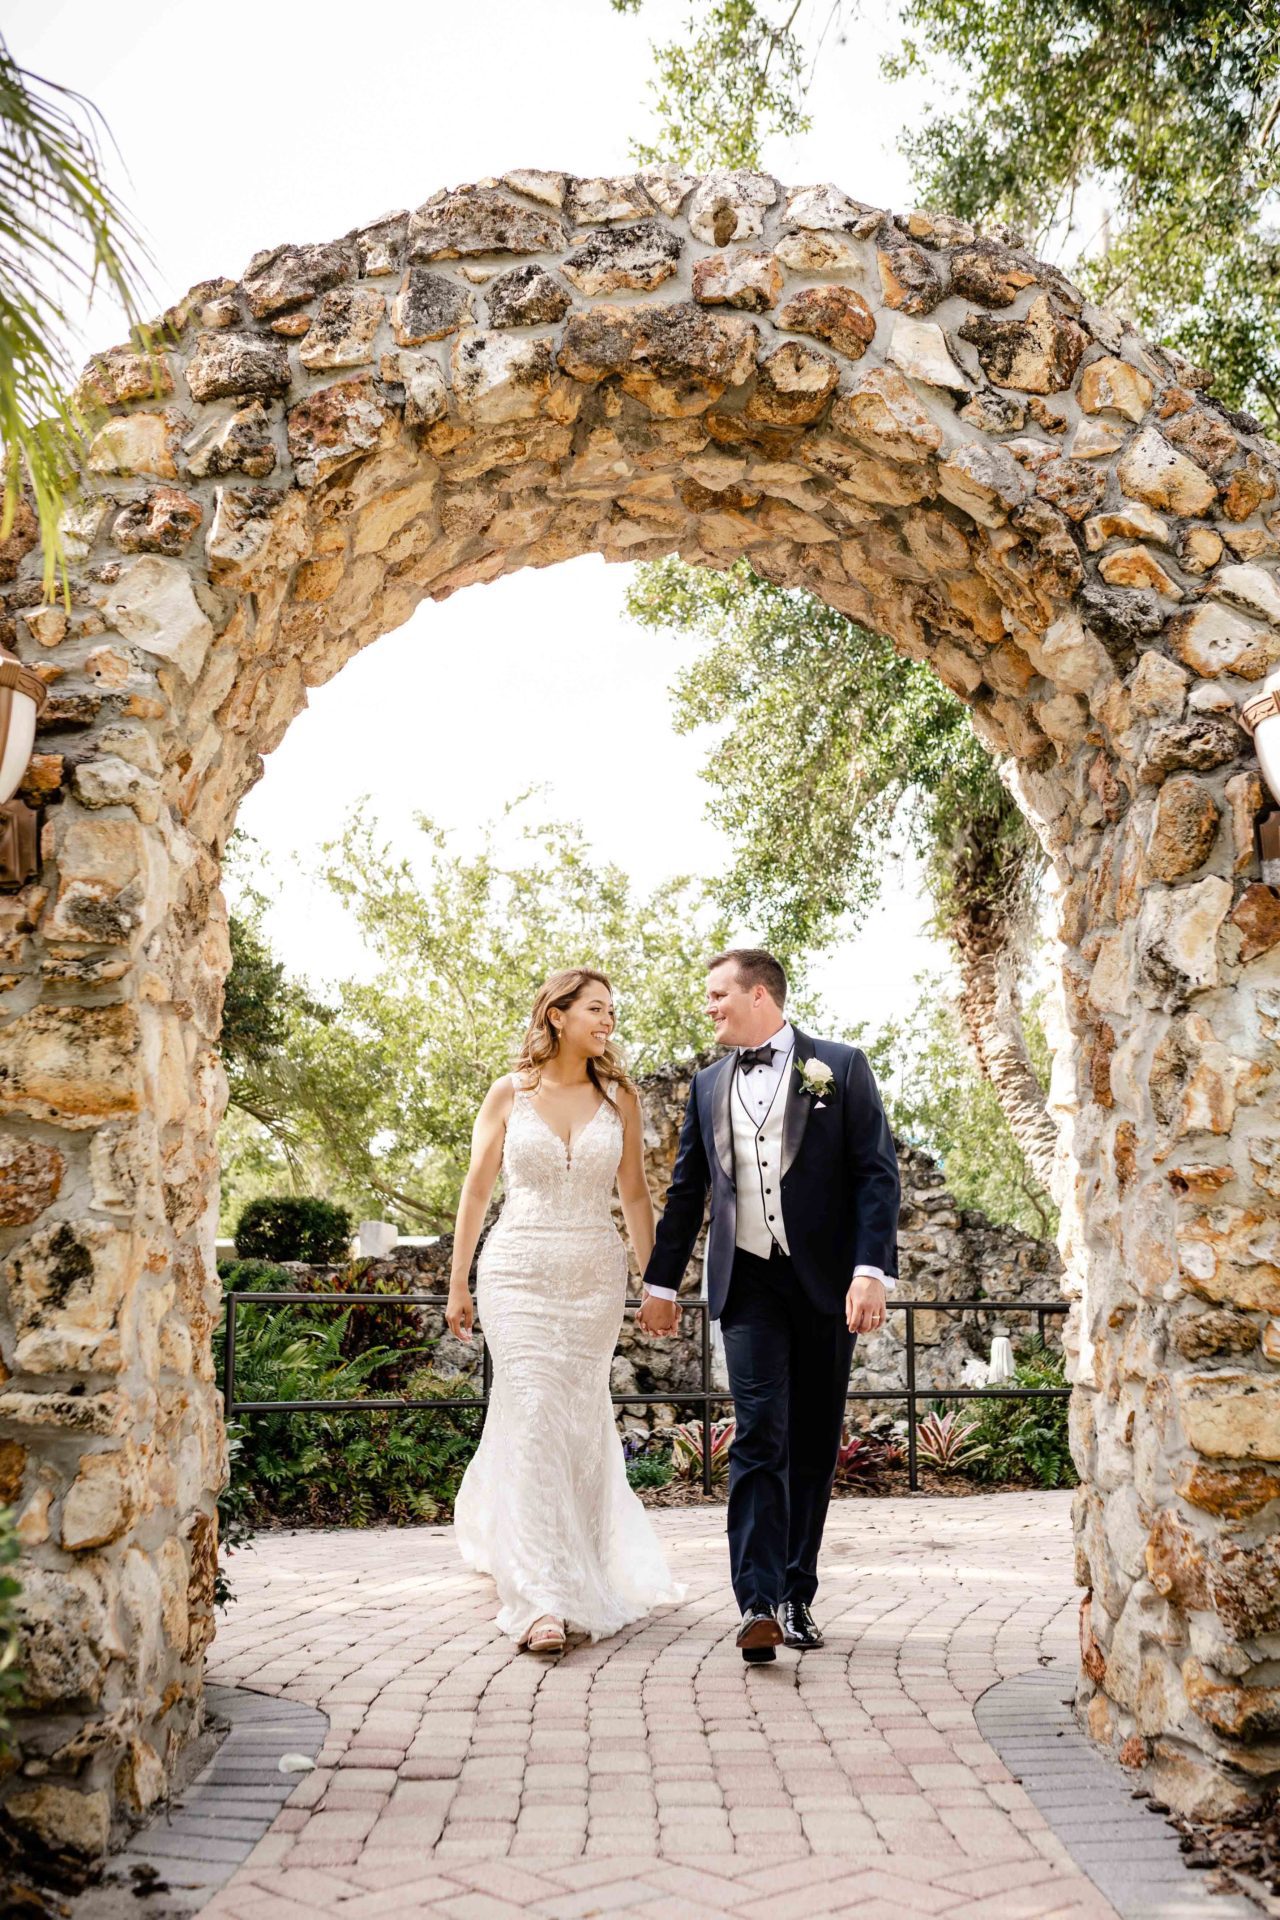 Gorgeous wedding in May Orlando Florida walking through stone arch